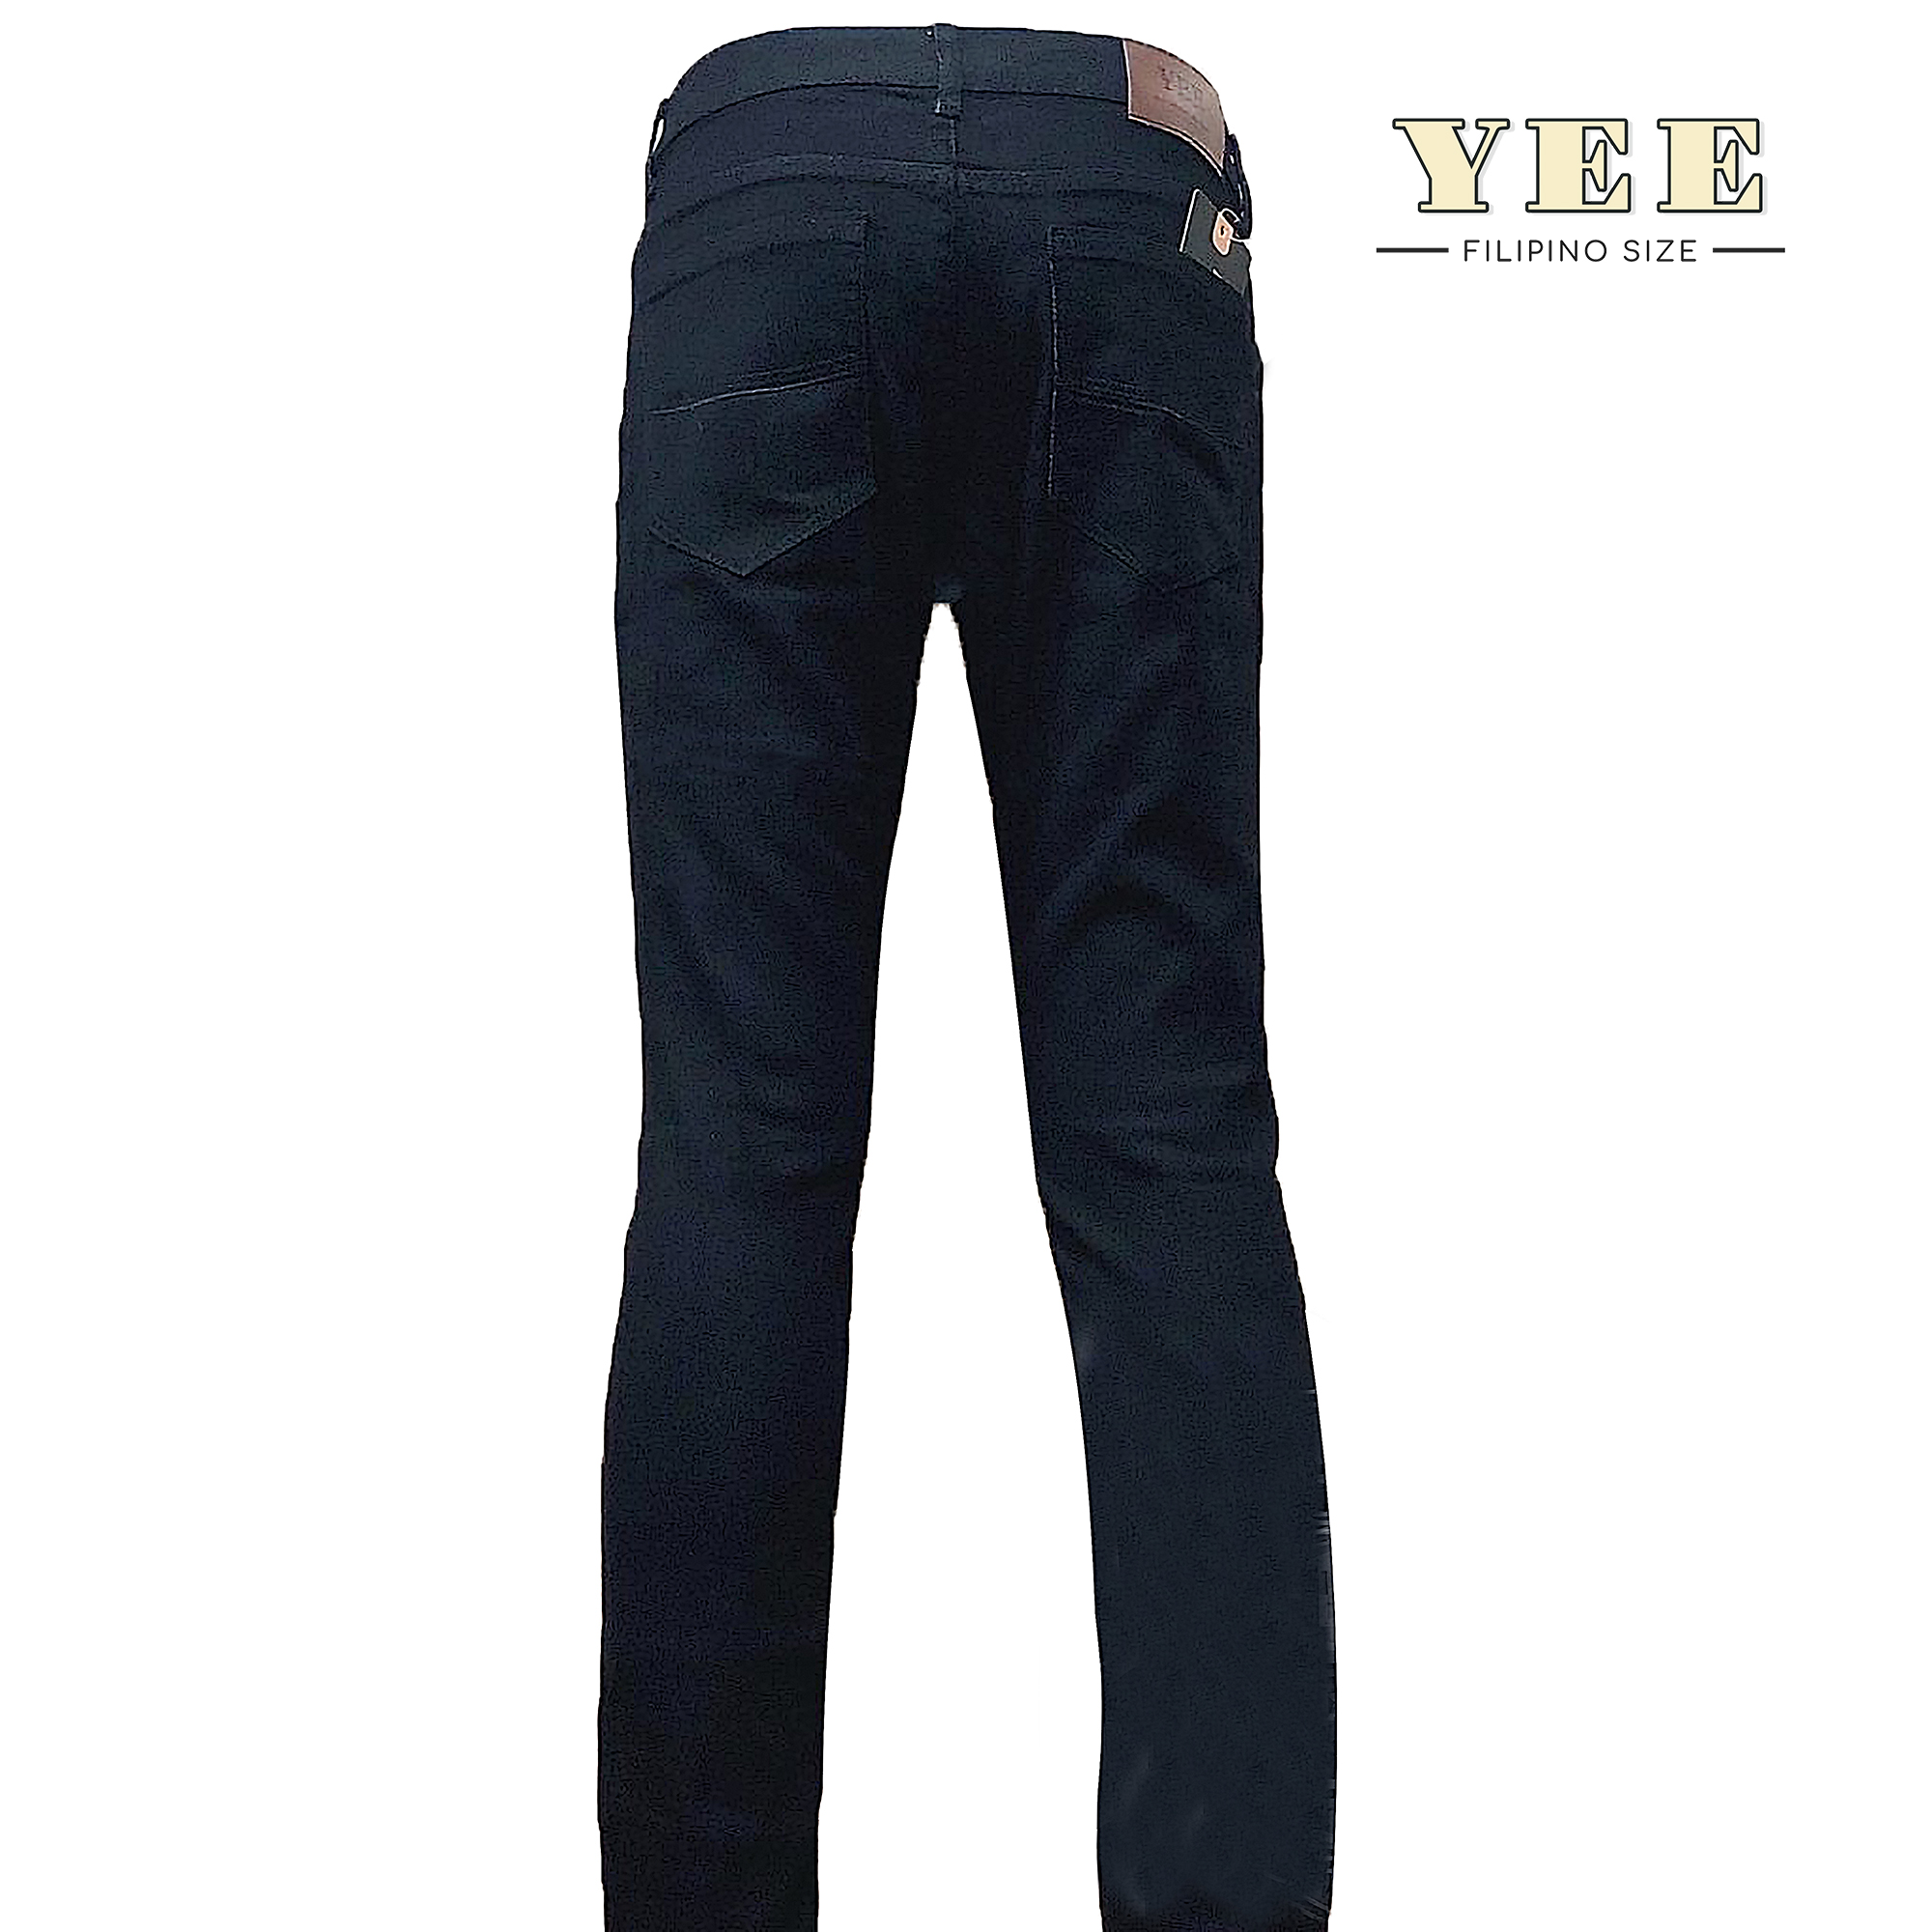 Buy Blue Jeans For Men Online in India | Myntra-cheohanoi.vn